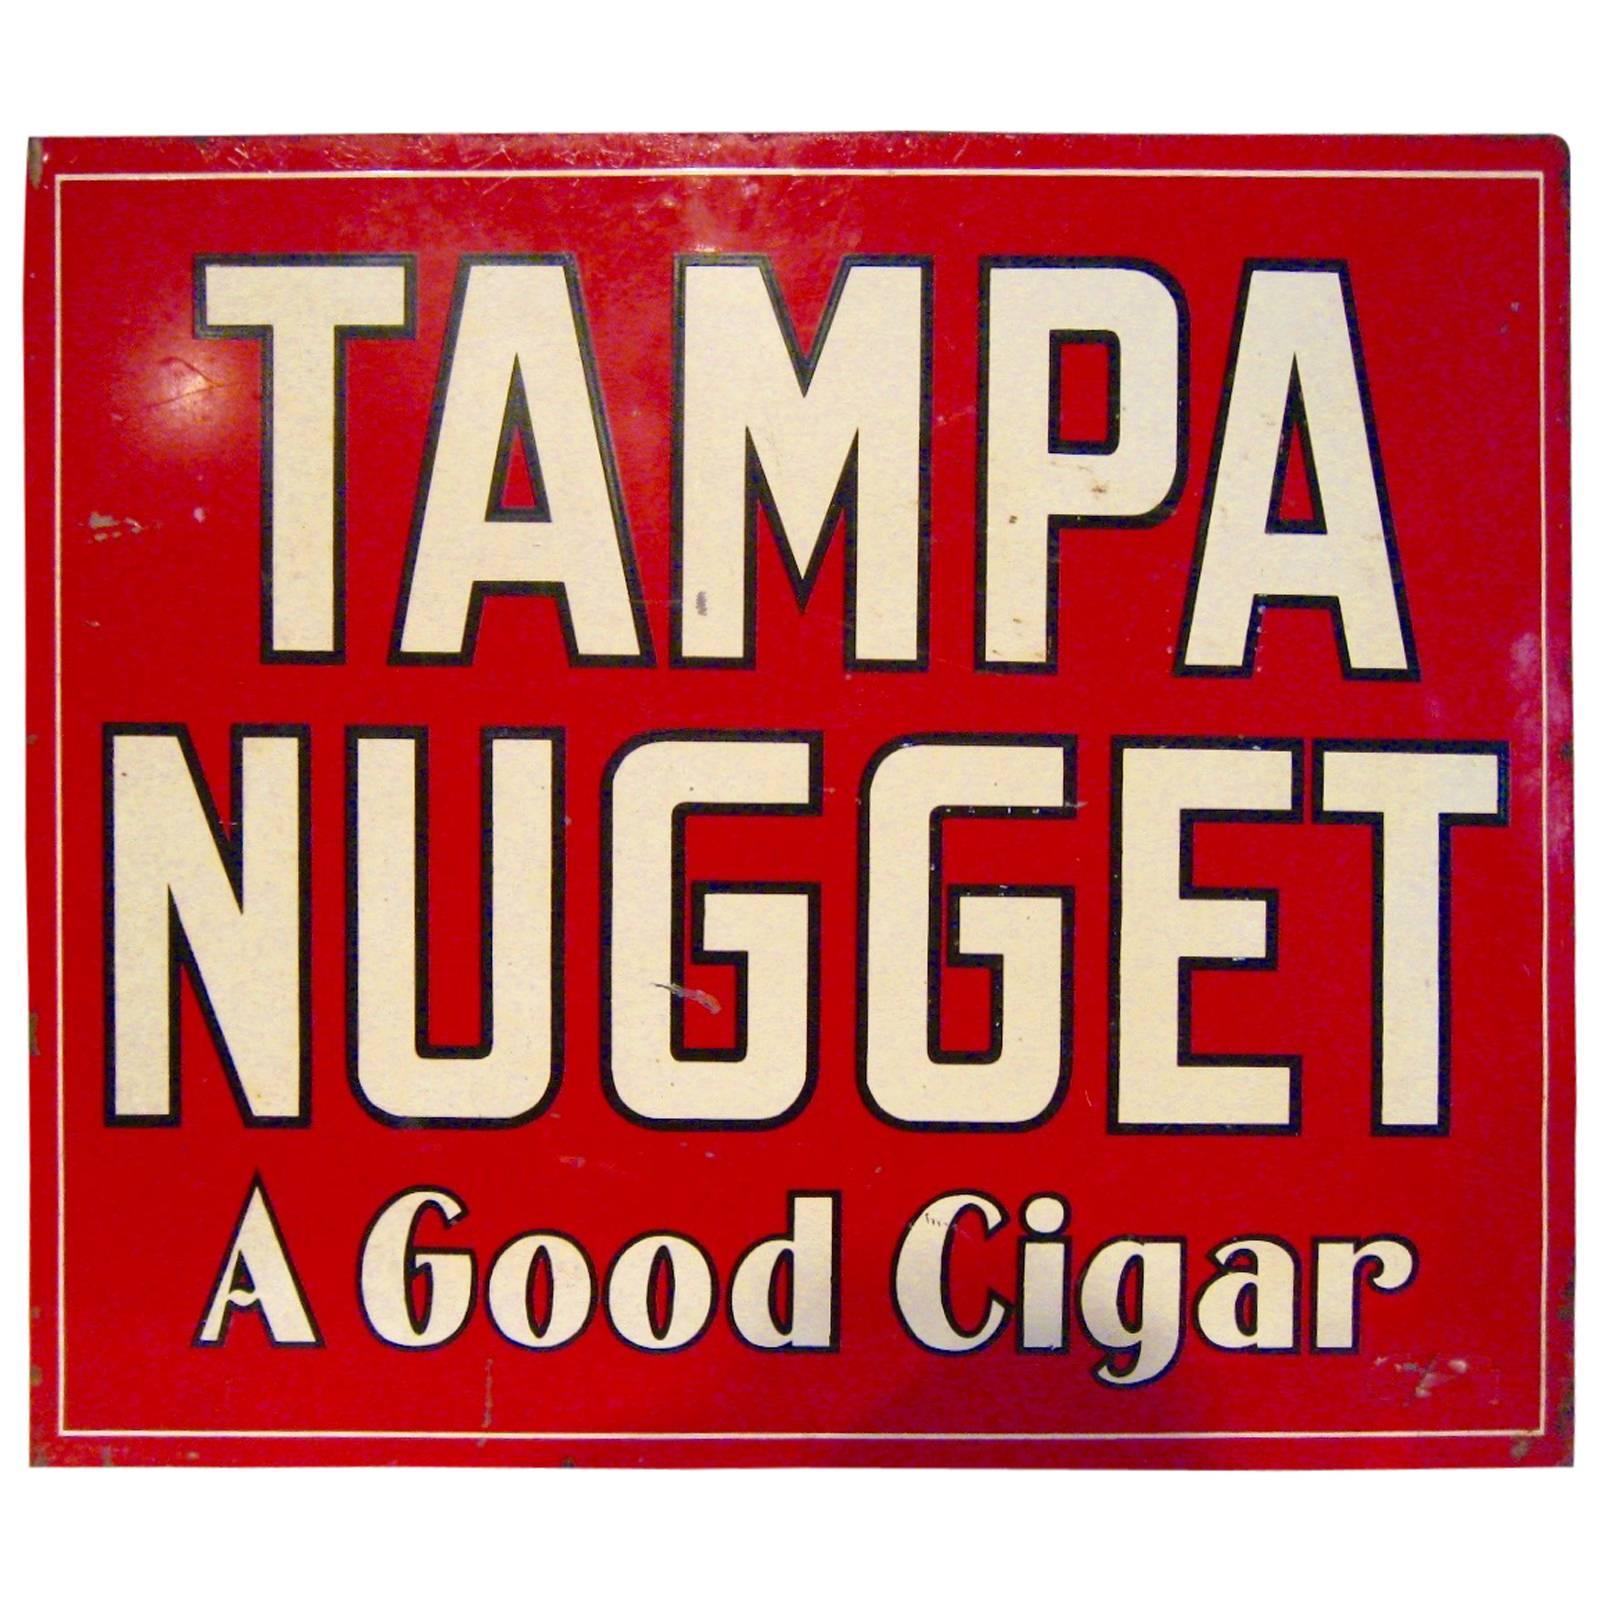 Tampa Nugget Cigar Sign